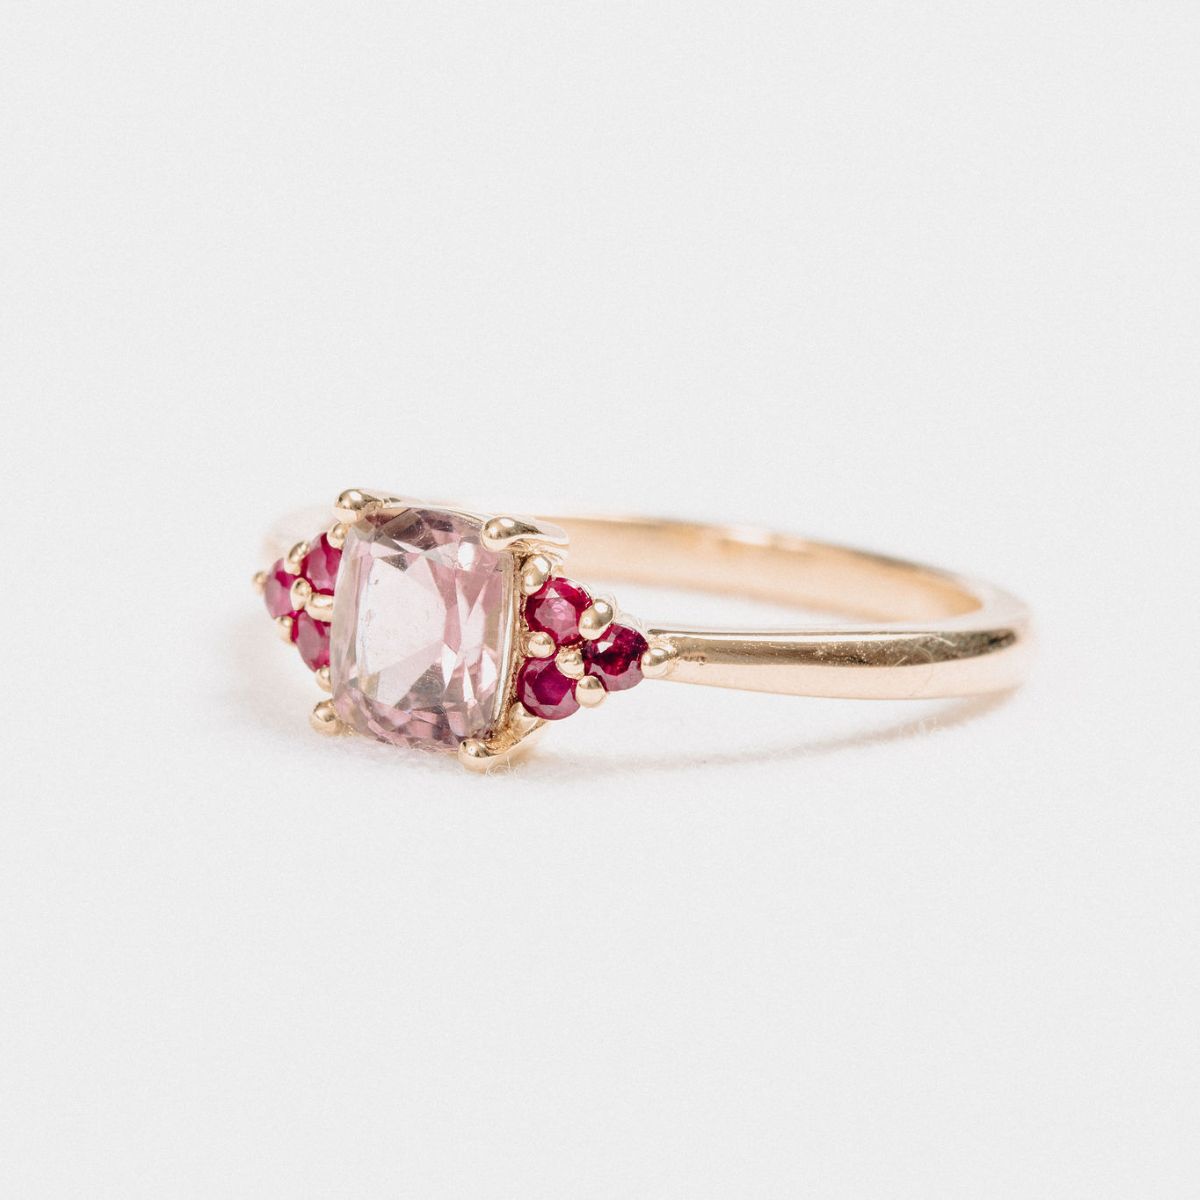 Glorious Pink Tourmaline Ring with Diamonds | SCHMUCKTRAEUME.COM